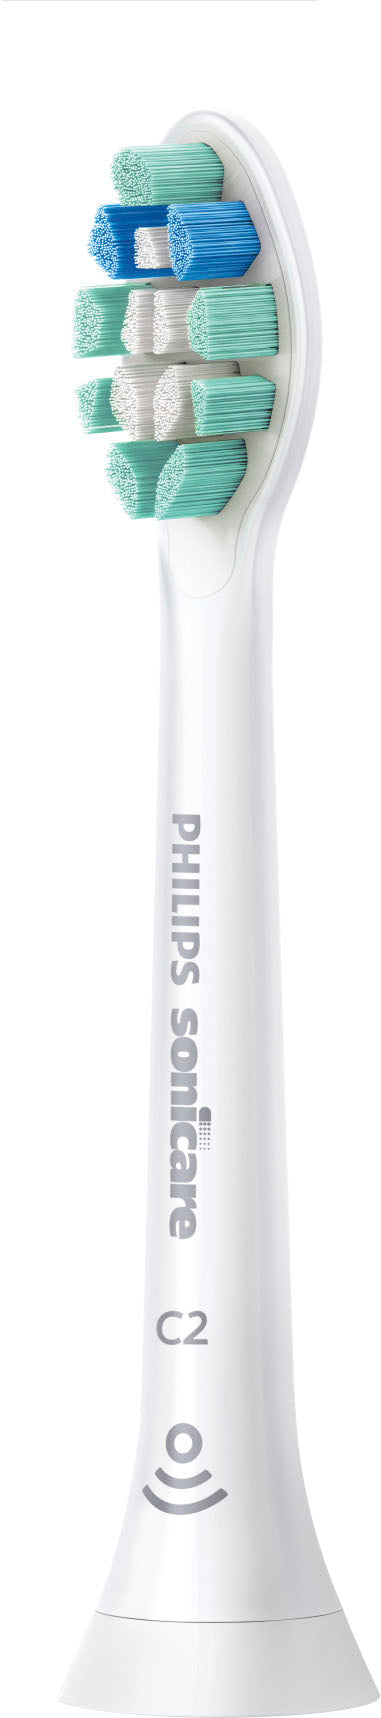 Philips Sonicare 4100 Power Toothbrush - Black_3